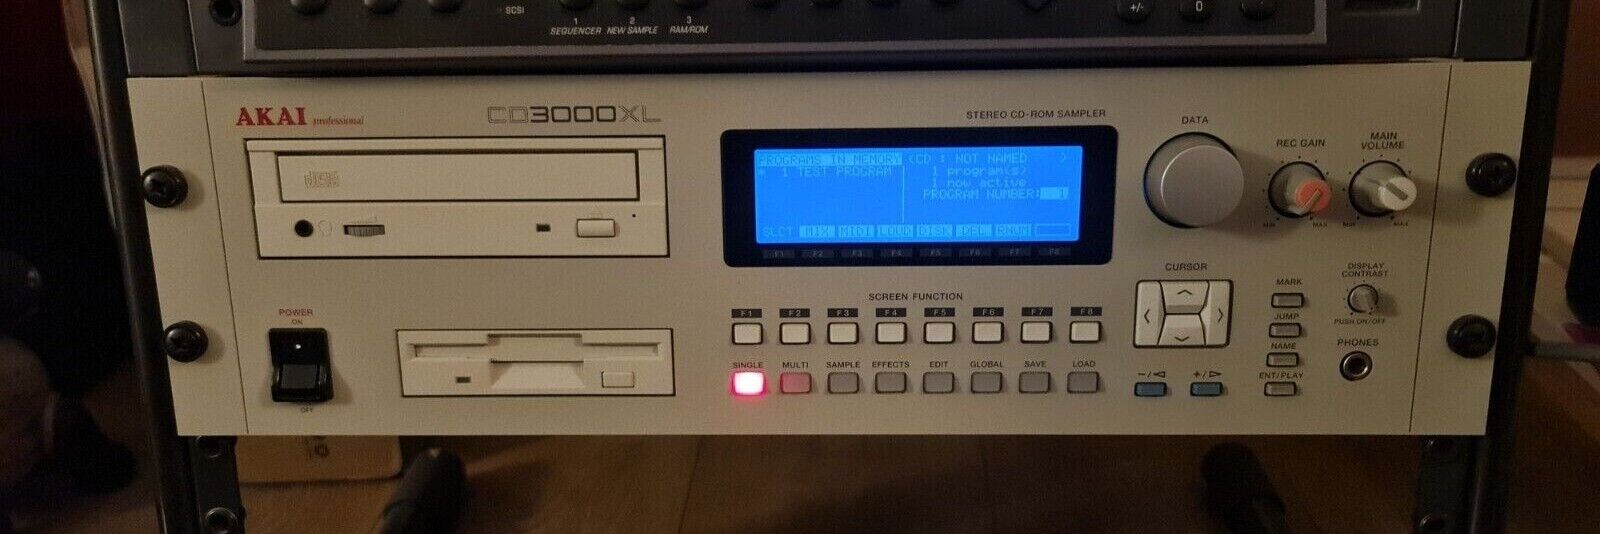 OS 1.52 Akai Akai CD3000XL sampler 16 MWords 